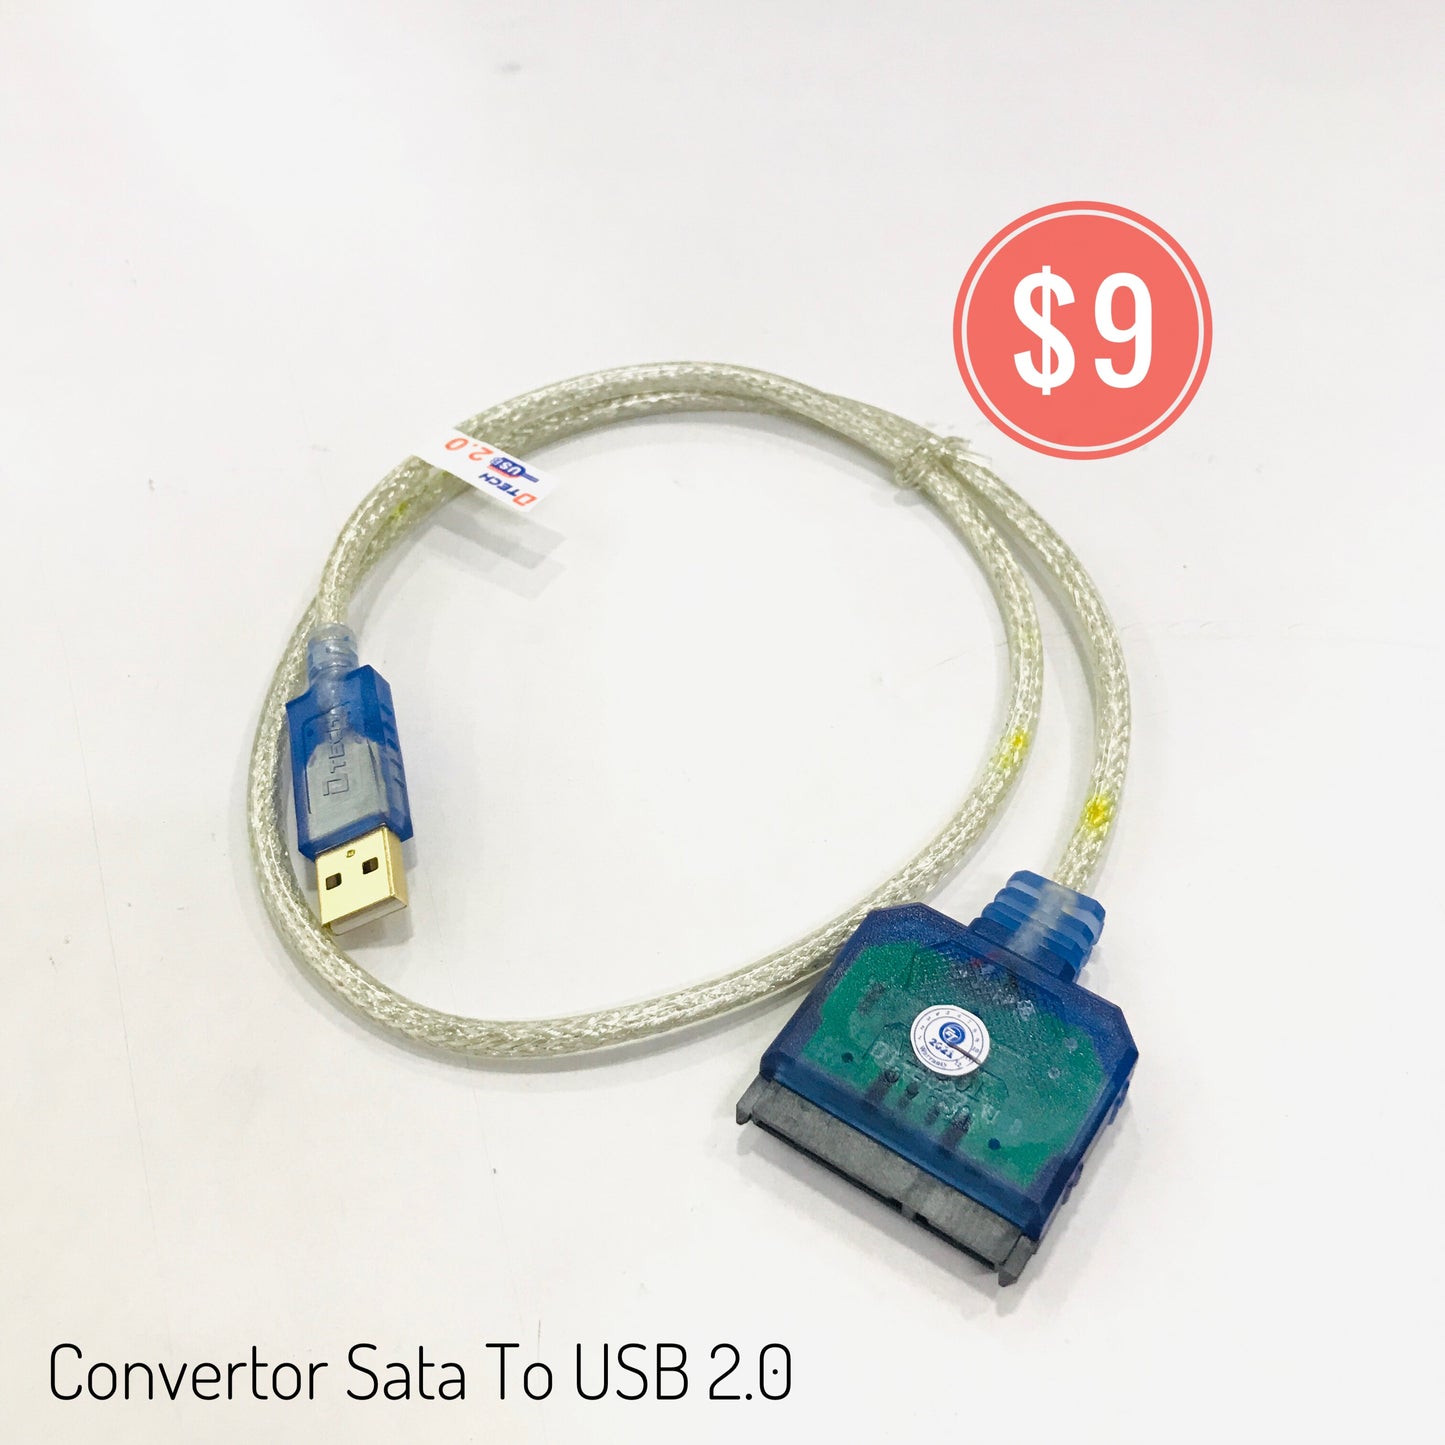 Convert Sata to USB